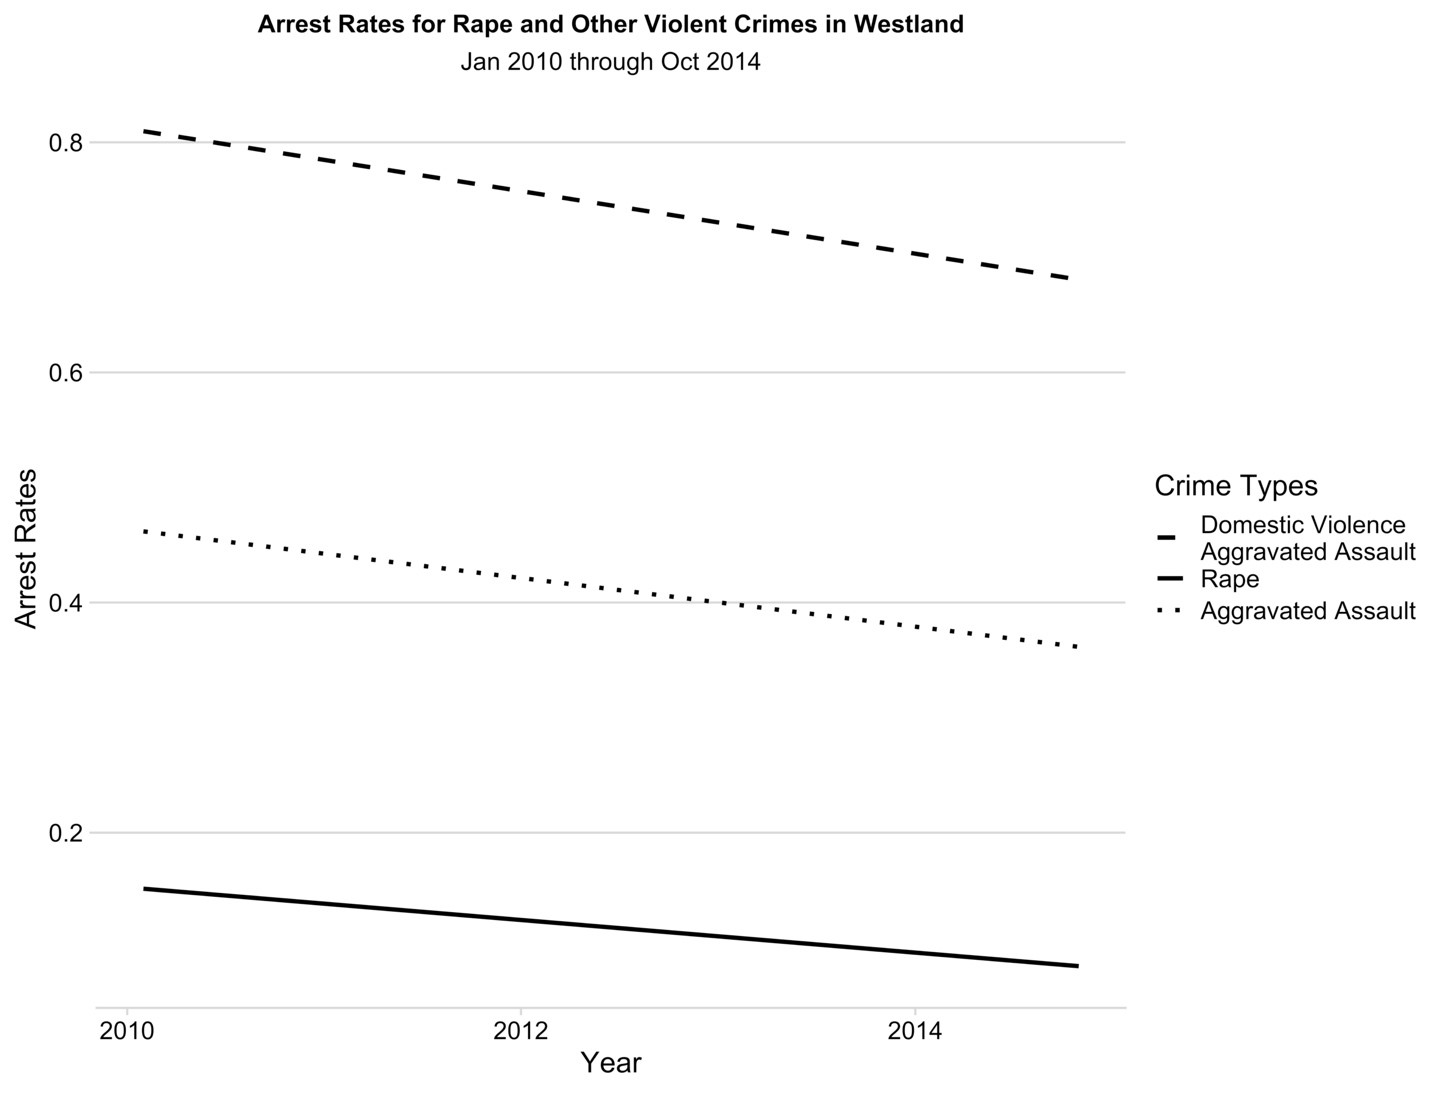 Arrest Rates for Rape and Other Violent Crimes in Westland, Jan 2010 through Oct 2014